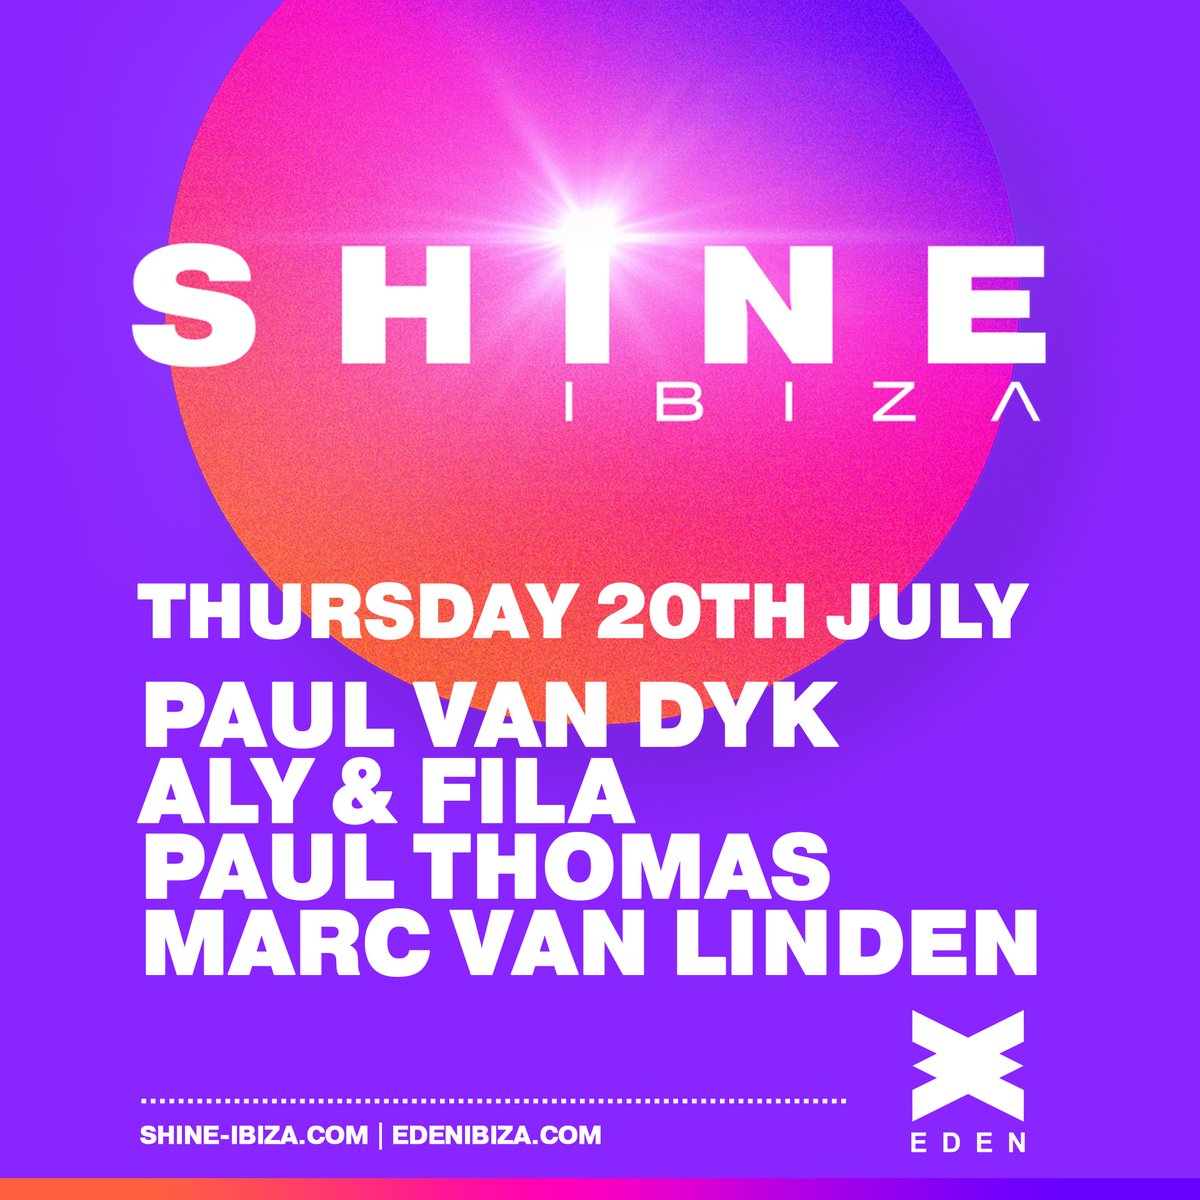 SHINE bright with us at @SHINE_Ibiza July 20th!
@alyandfila @djpaulthomas @marcvanlinden
👉 swipe.fm/shine-ibiza
#Ibiza #SHINEIbiza